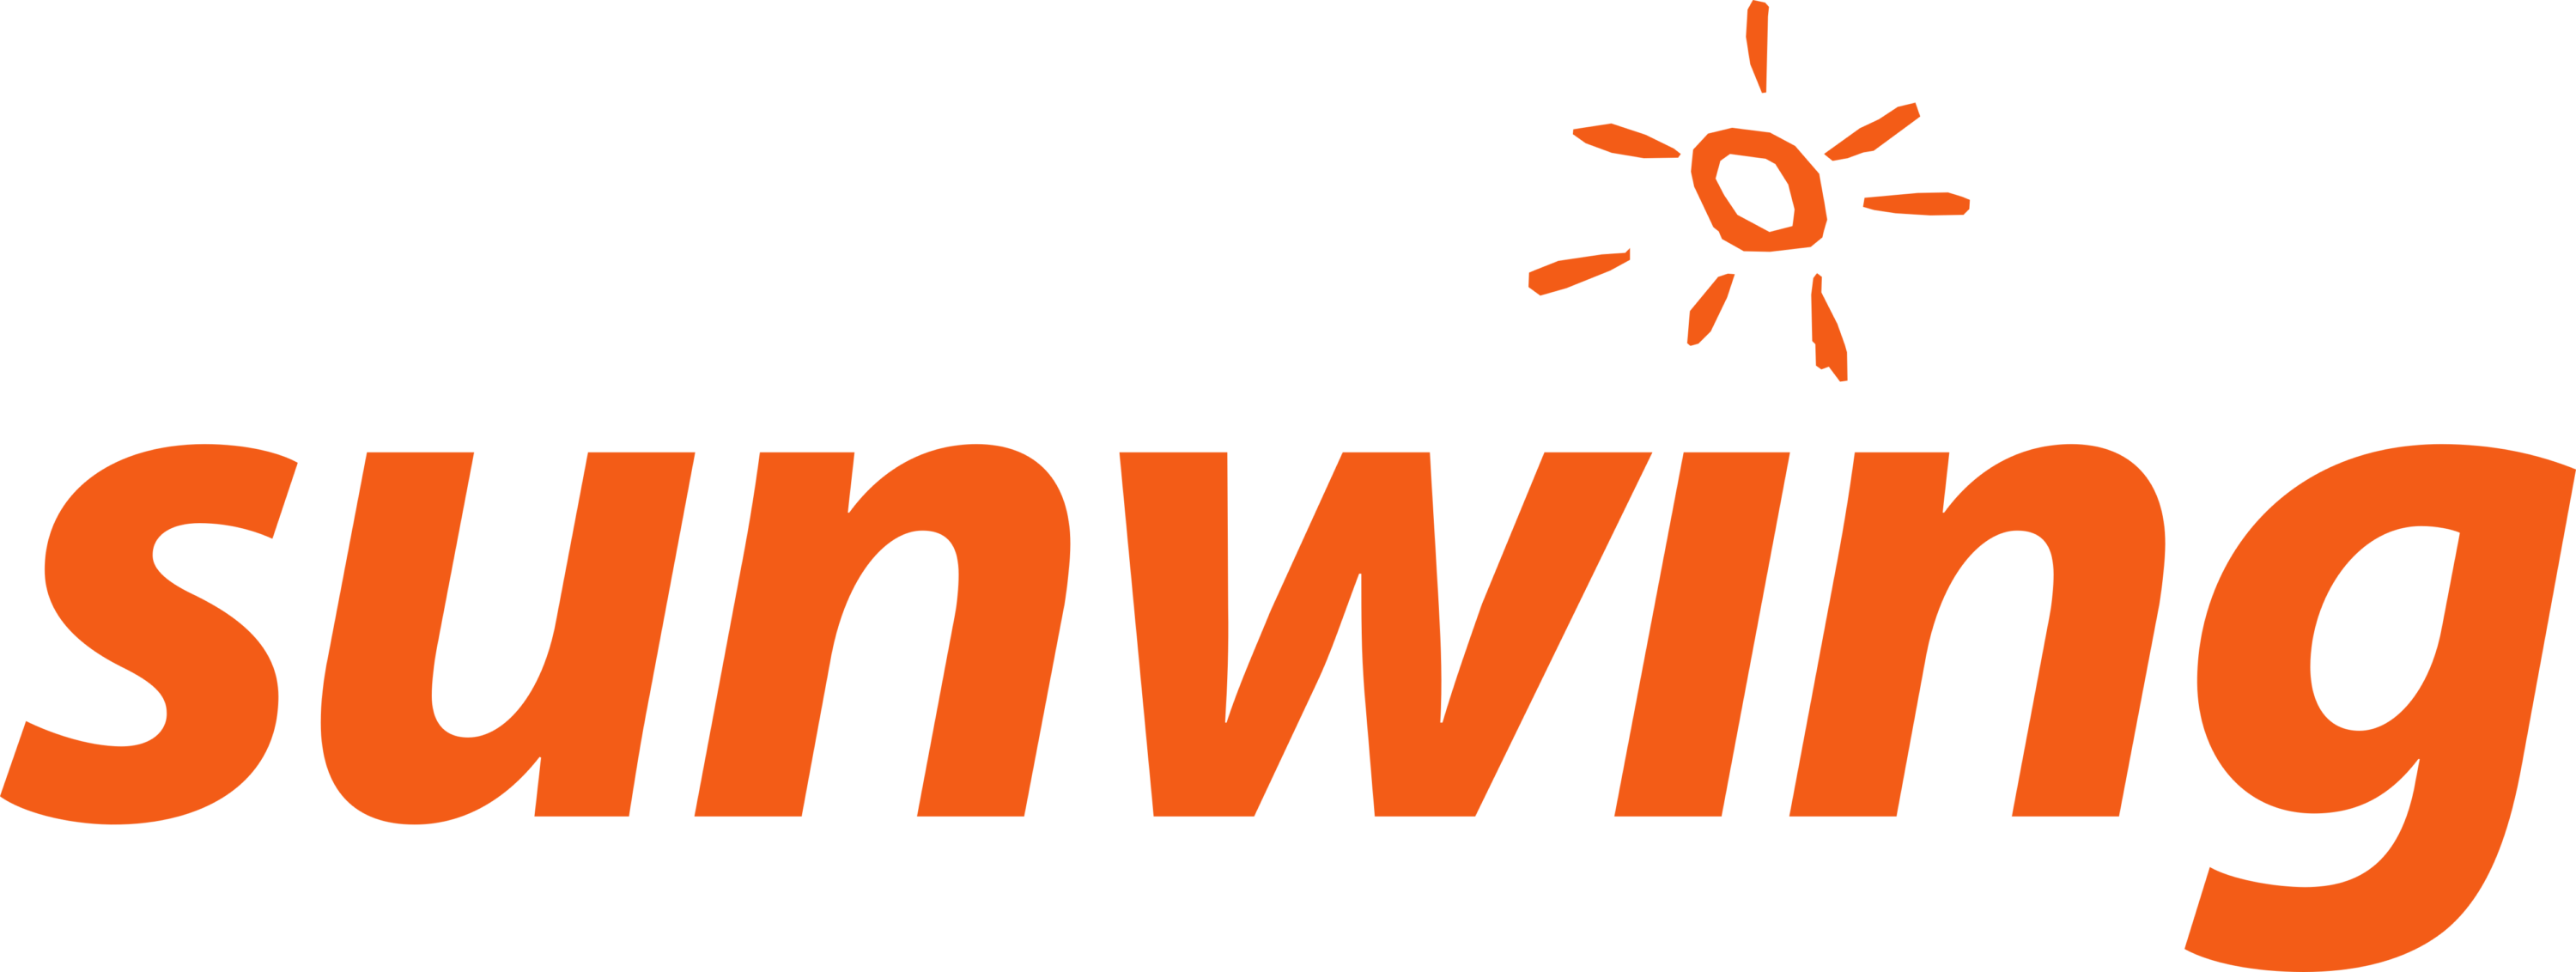 Sunwing Airlines Logo